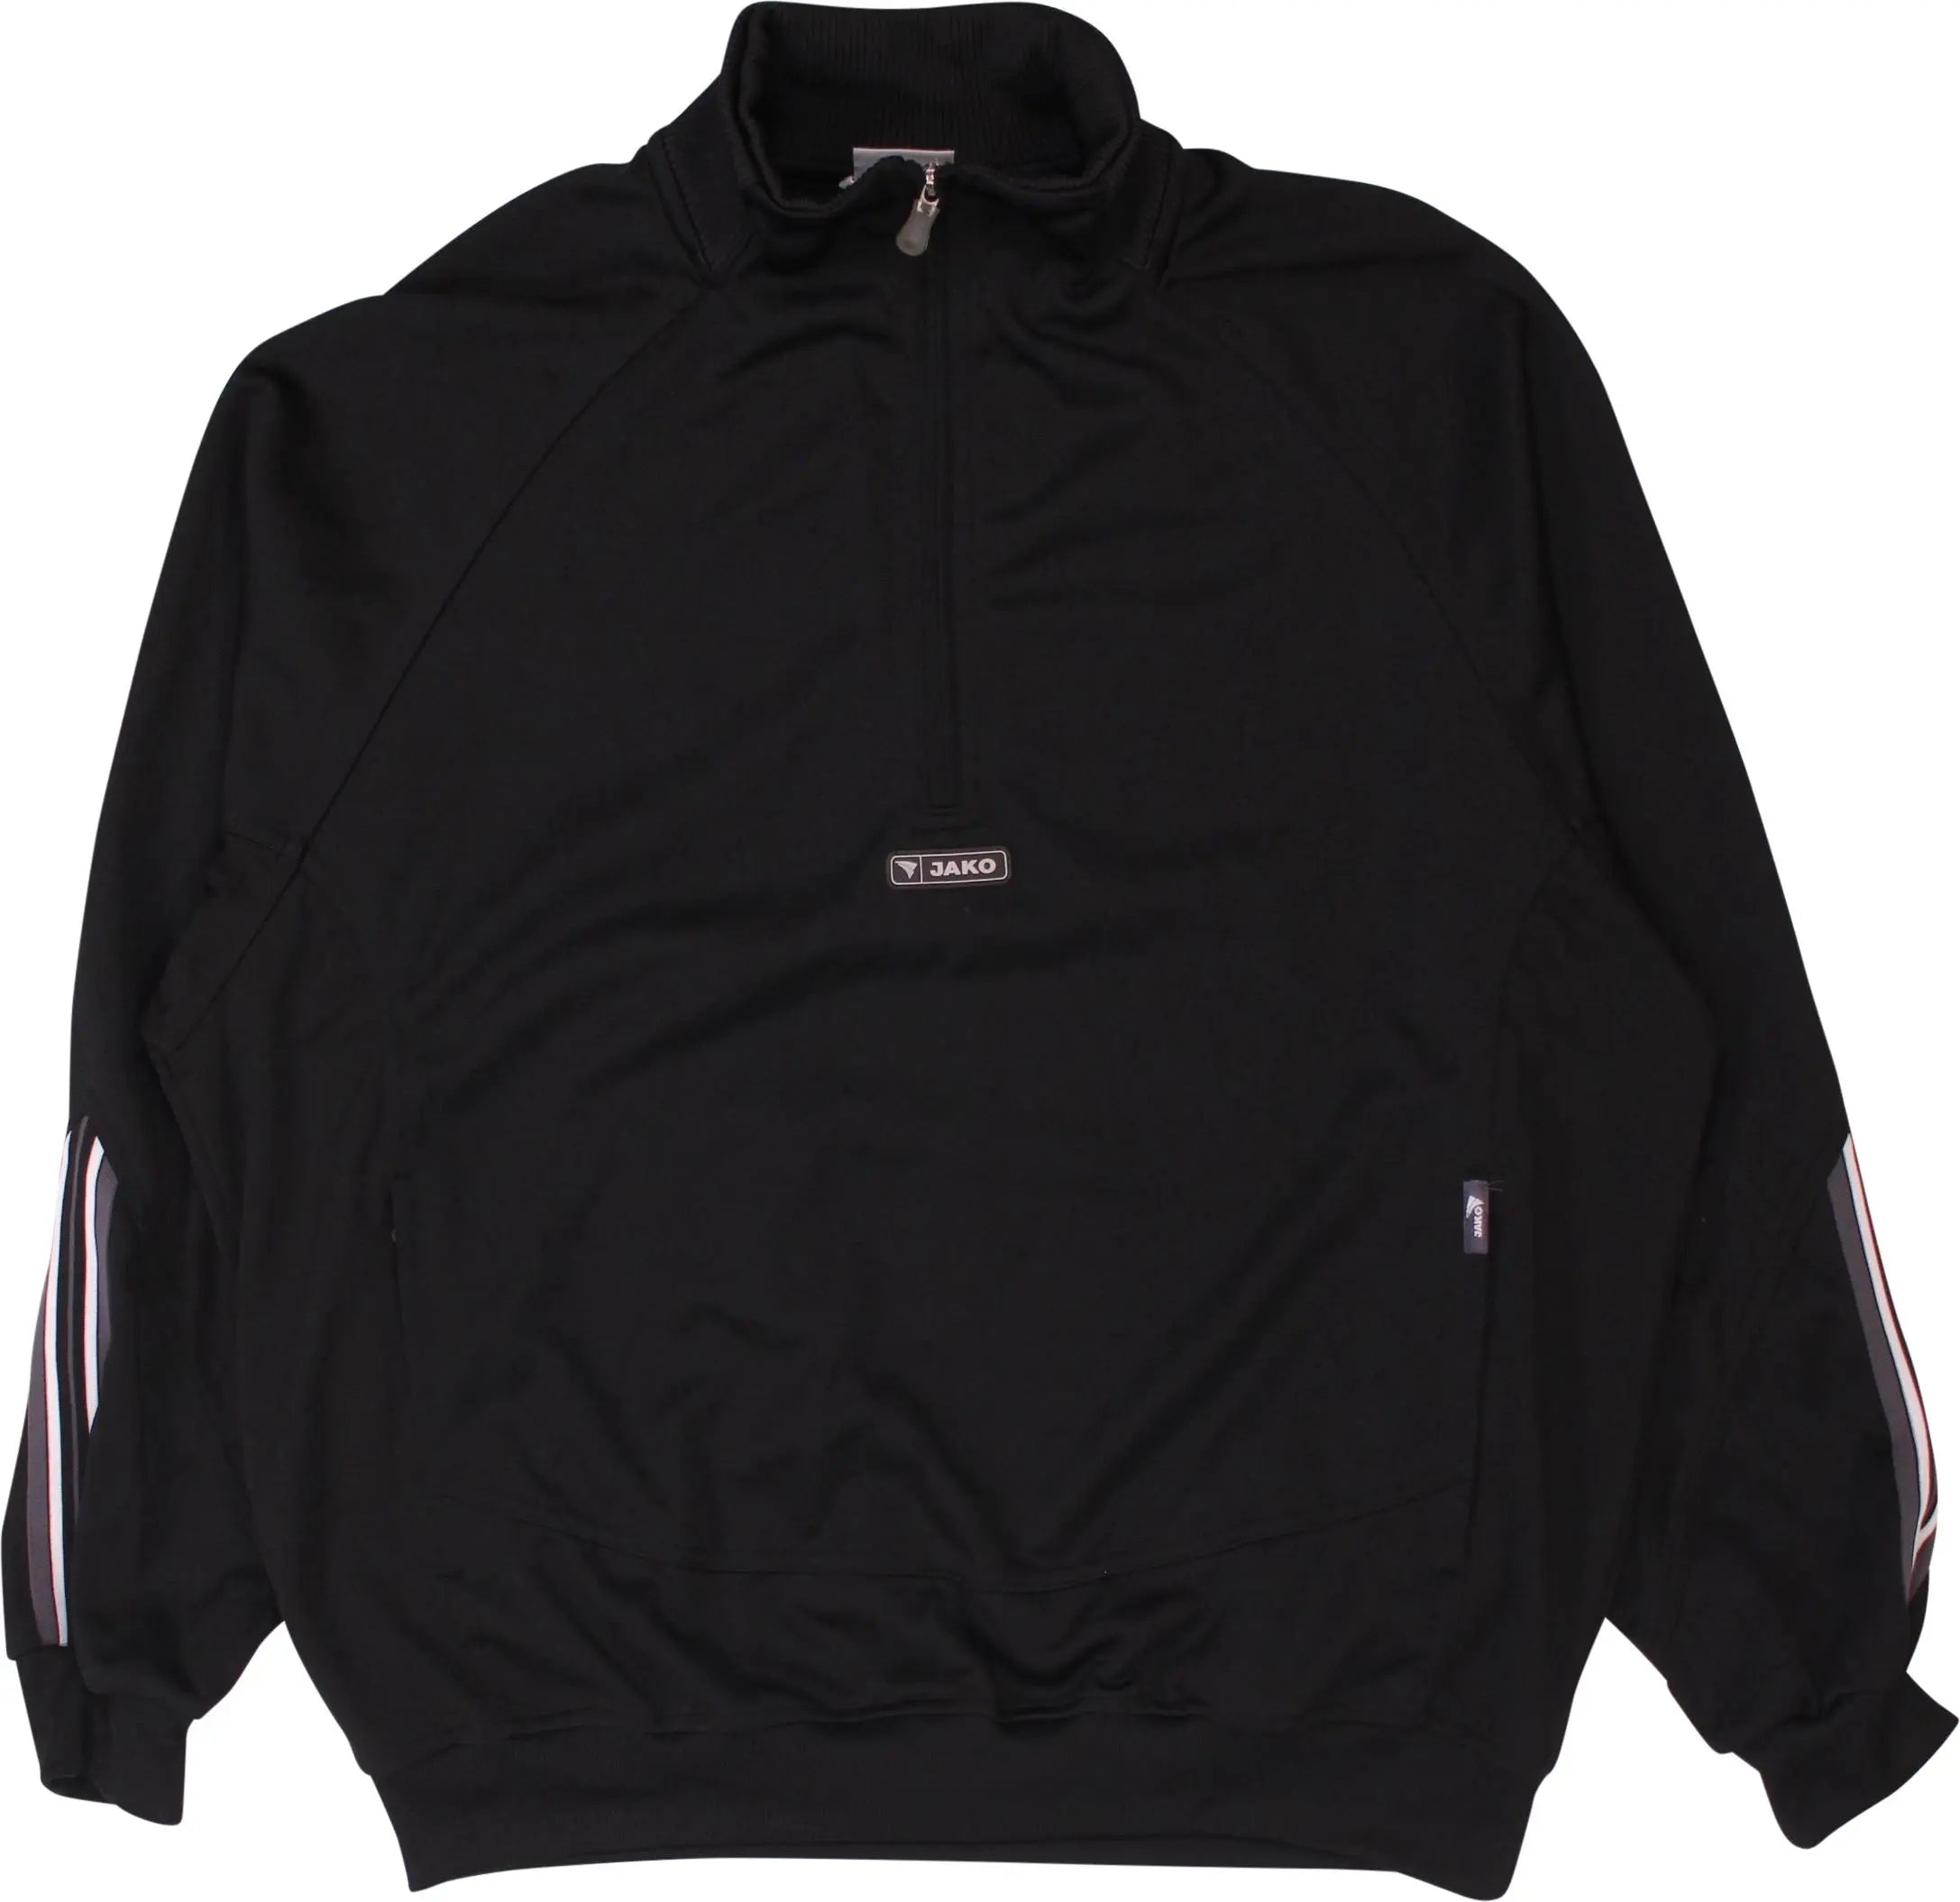 Jako - 90s/00s Black Track Jacket- ThriftTale.com - Vintage and second handclothing